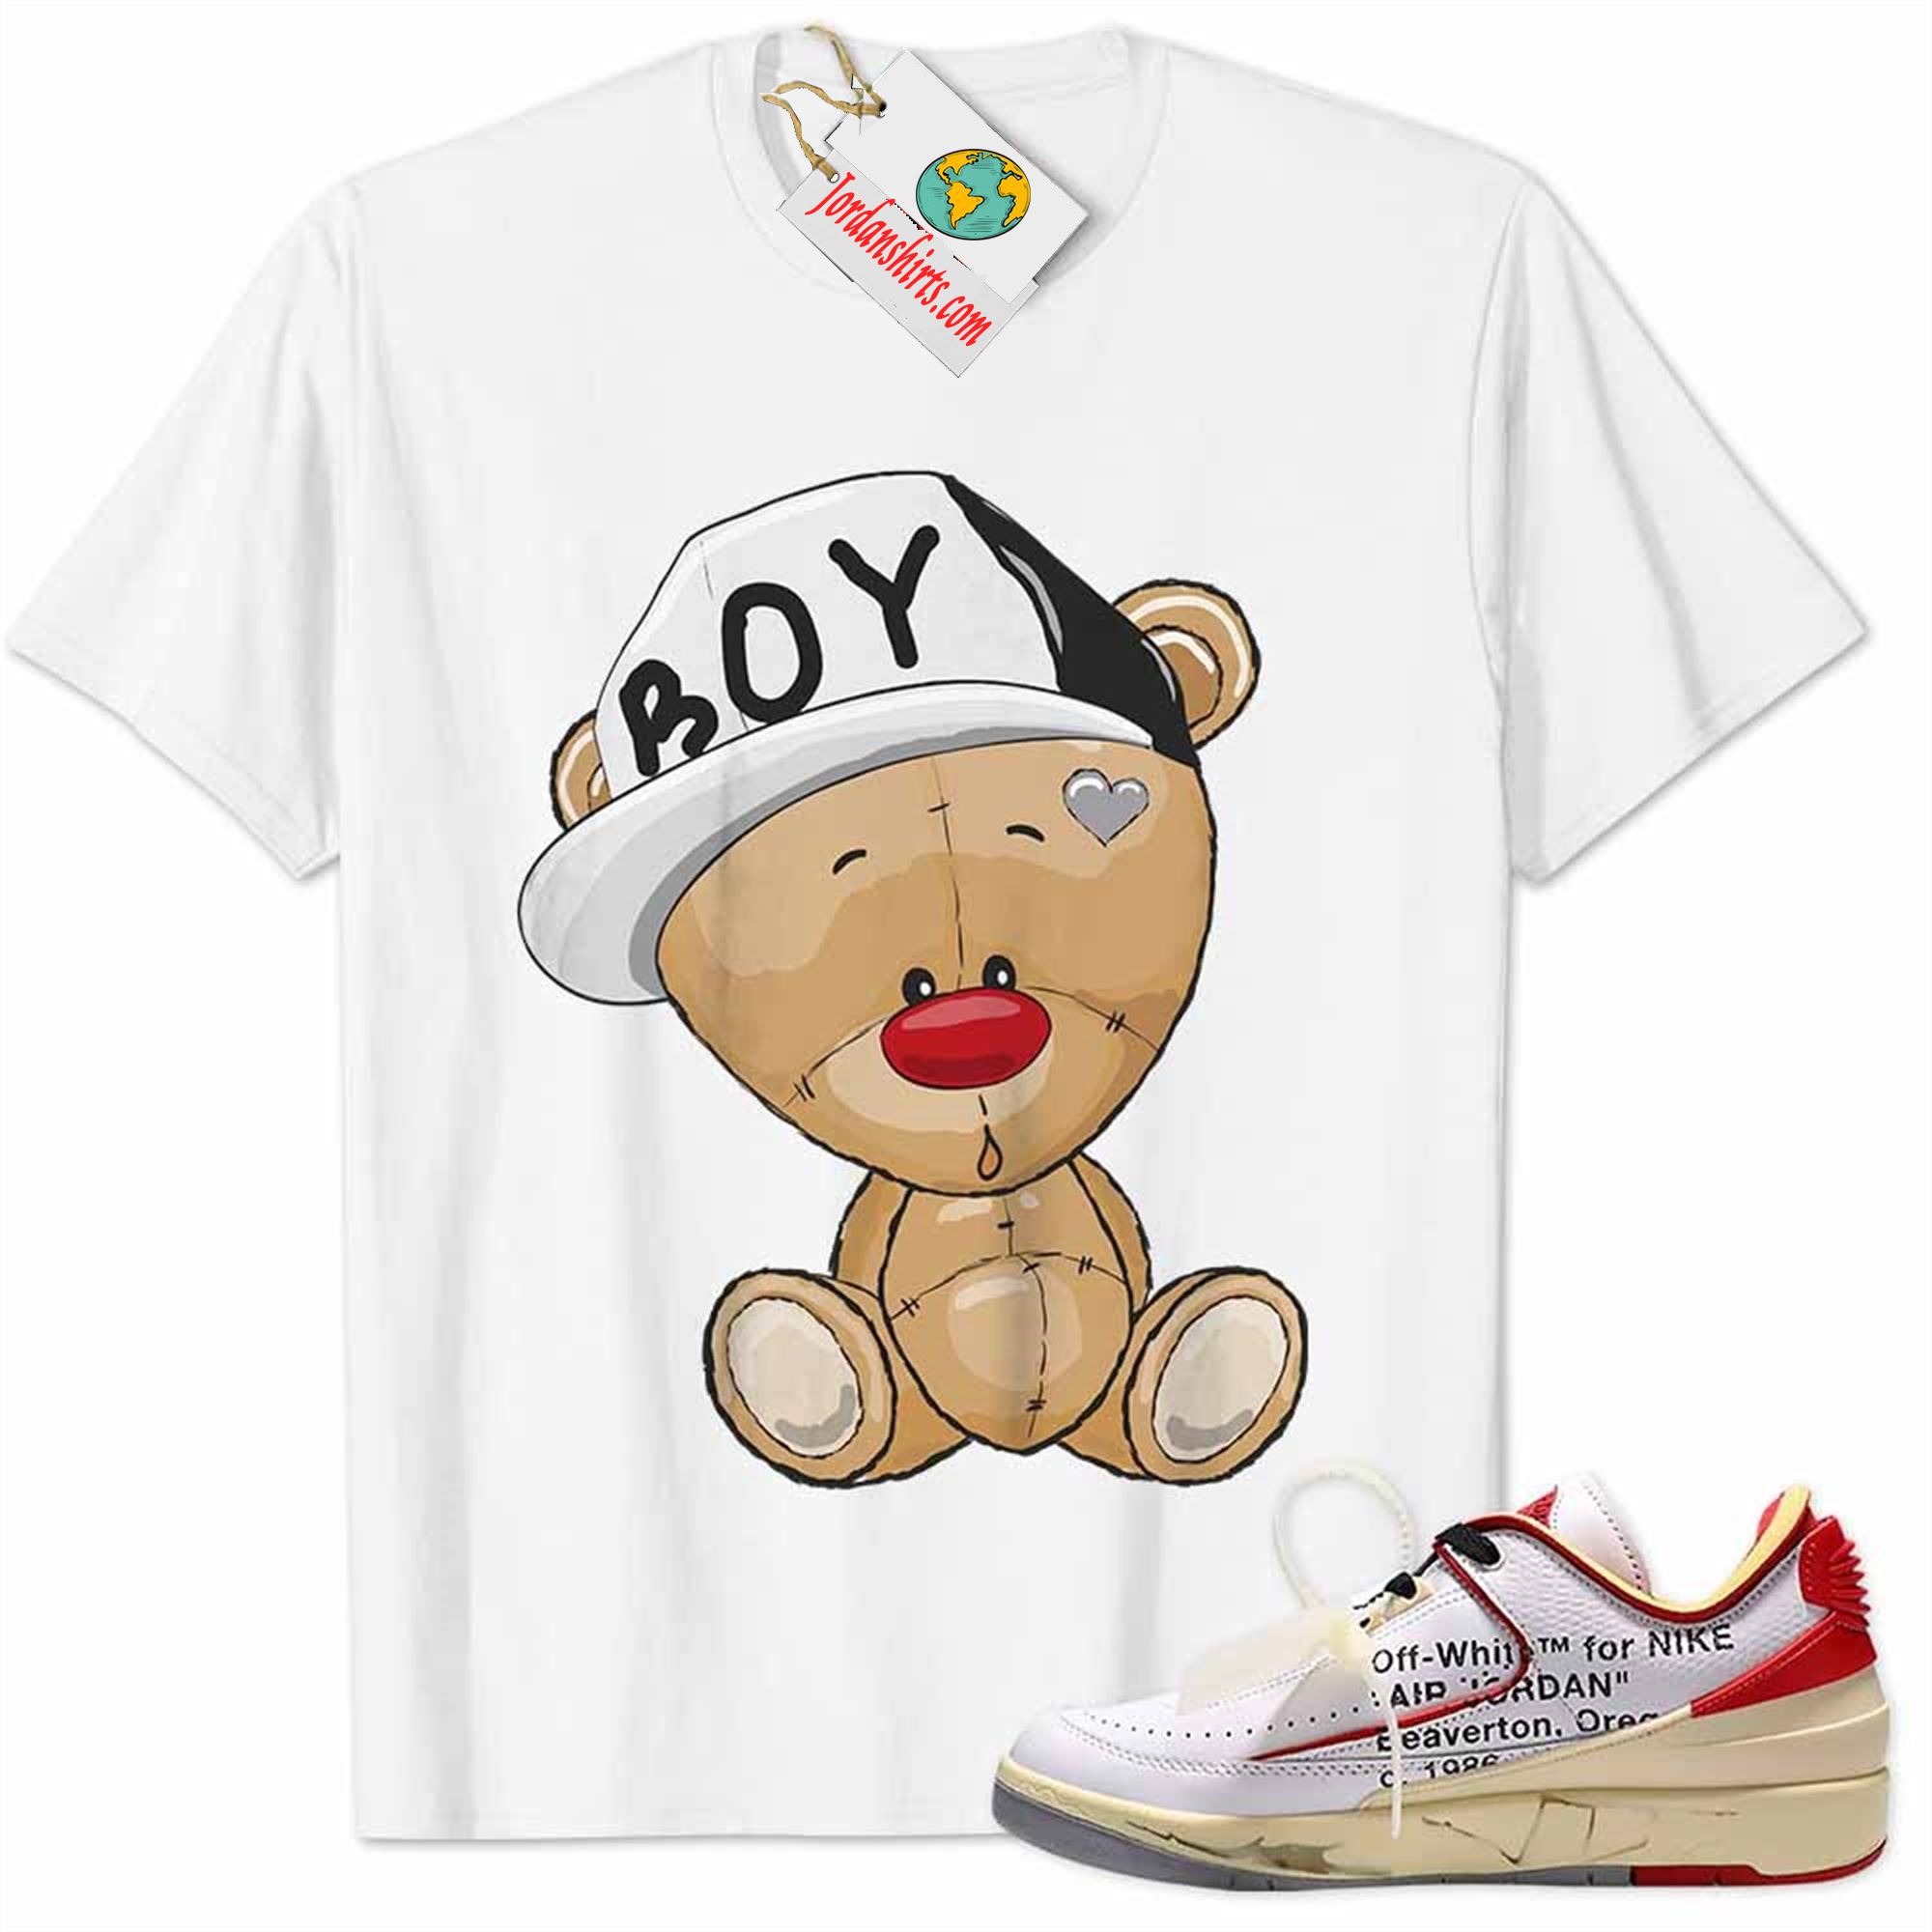 Jordan 2 Shirt, Jordan 2 Low White Red Off-white Shirt Cute Baby Teddy Bear White Plus Size Up To 5xl